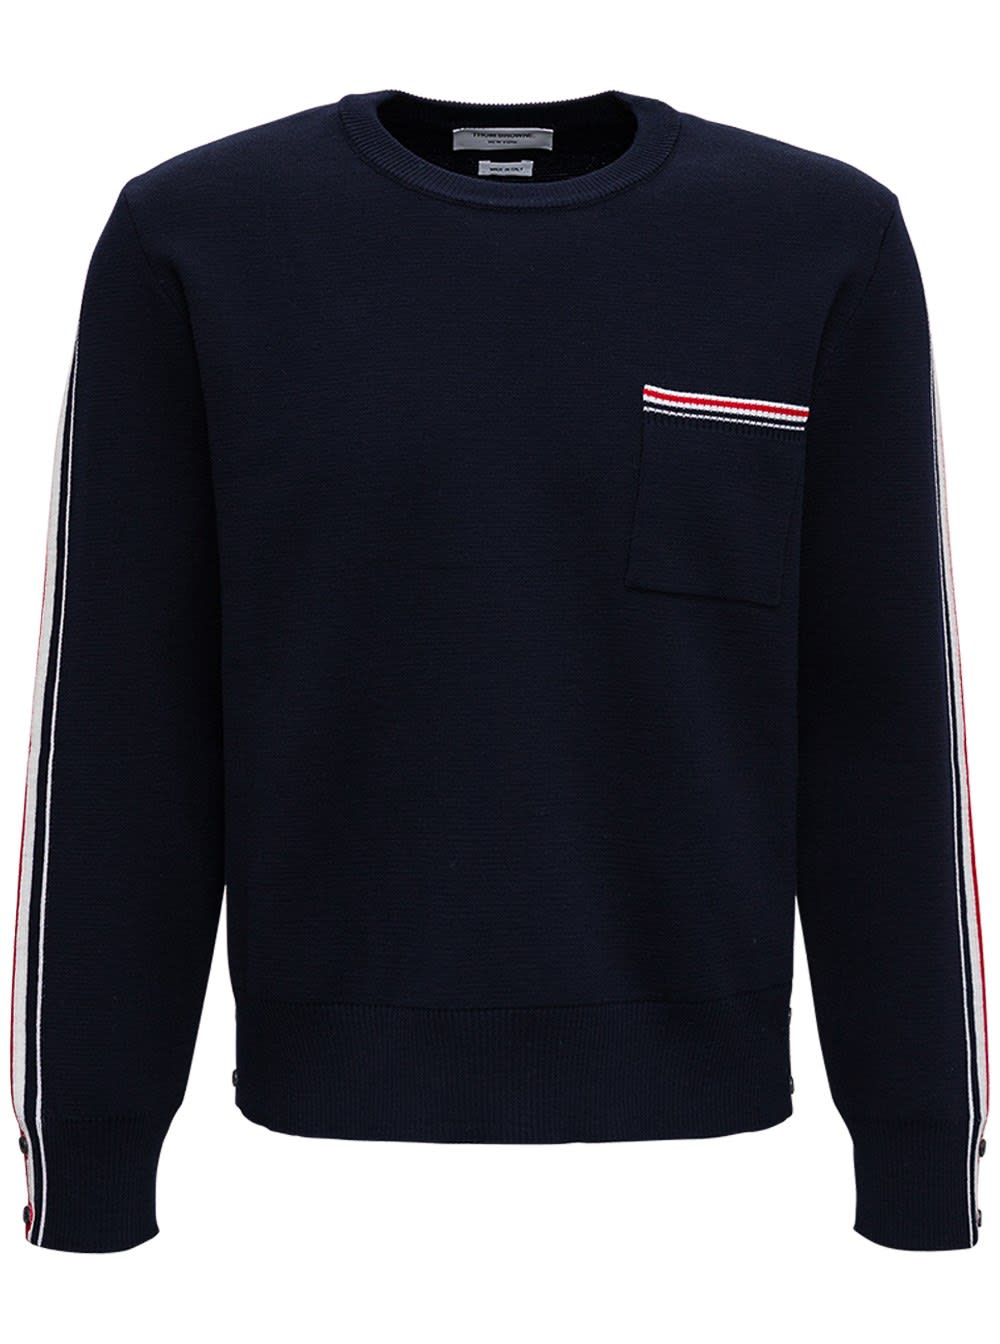 Thom Browne Blue Wool Sweater With Rwb Stripe Details